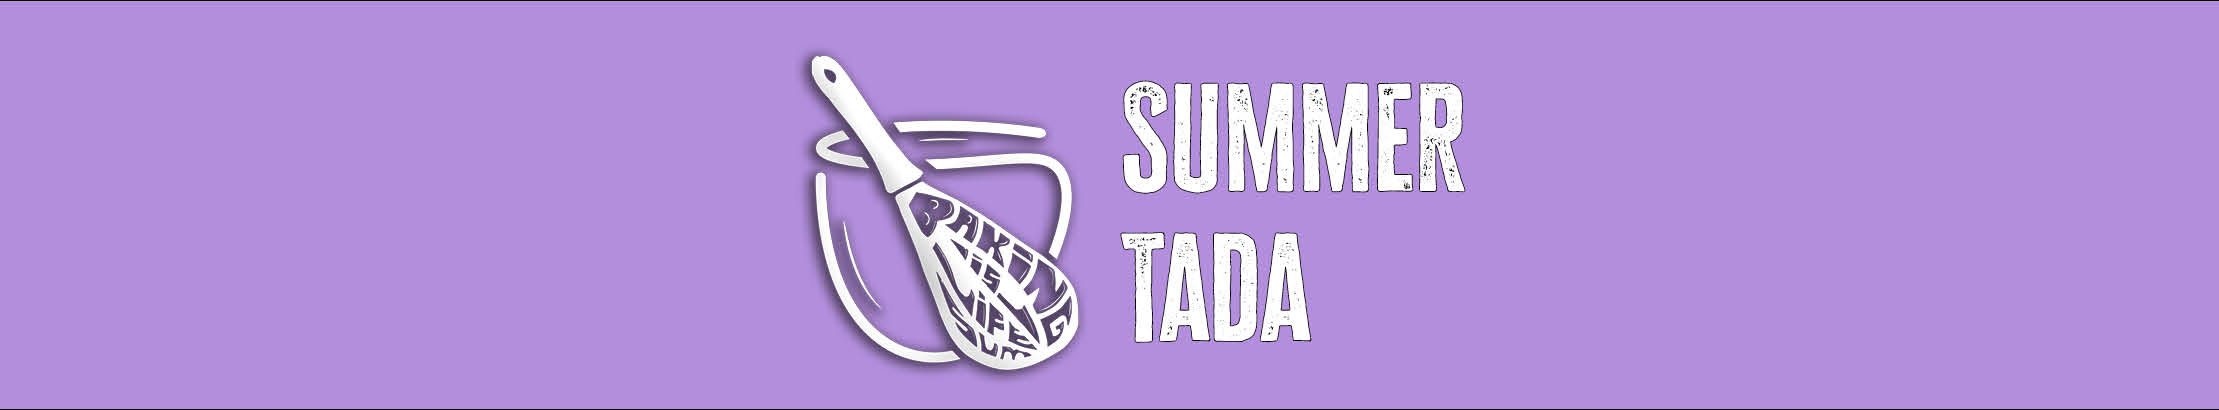 Summer Tadas profilbanner